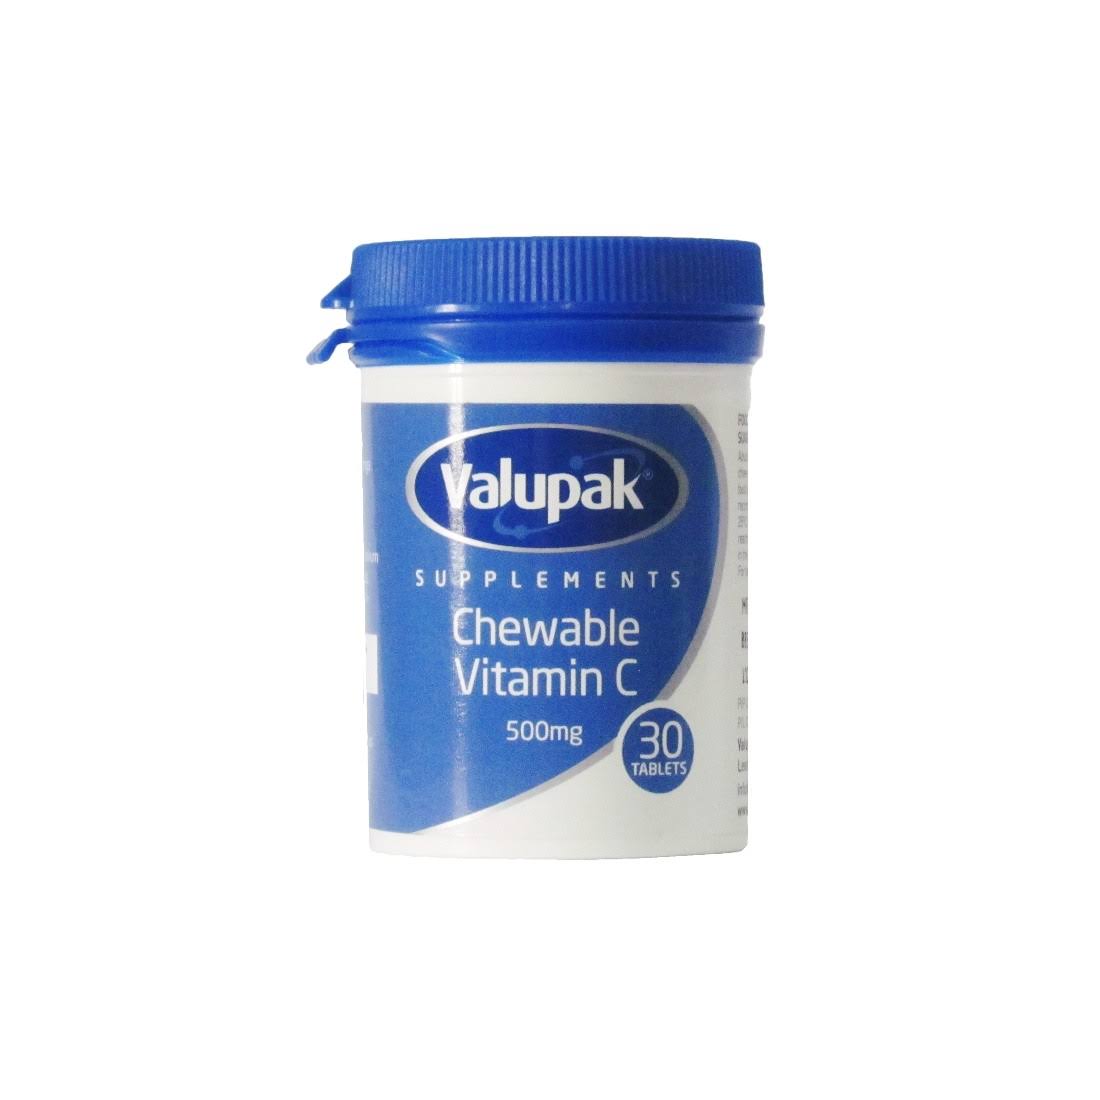 Valupak Supplements Chewable Vitamin C - 30 Tablets